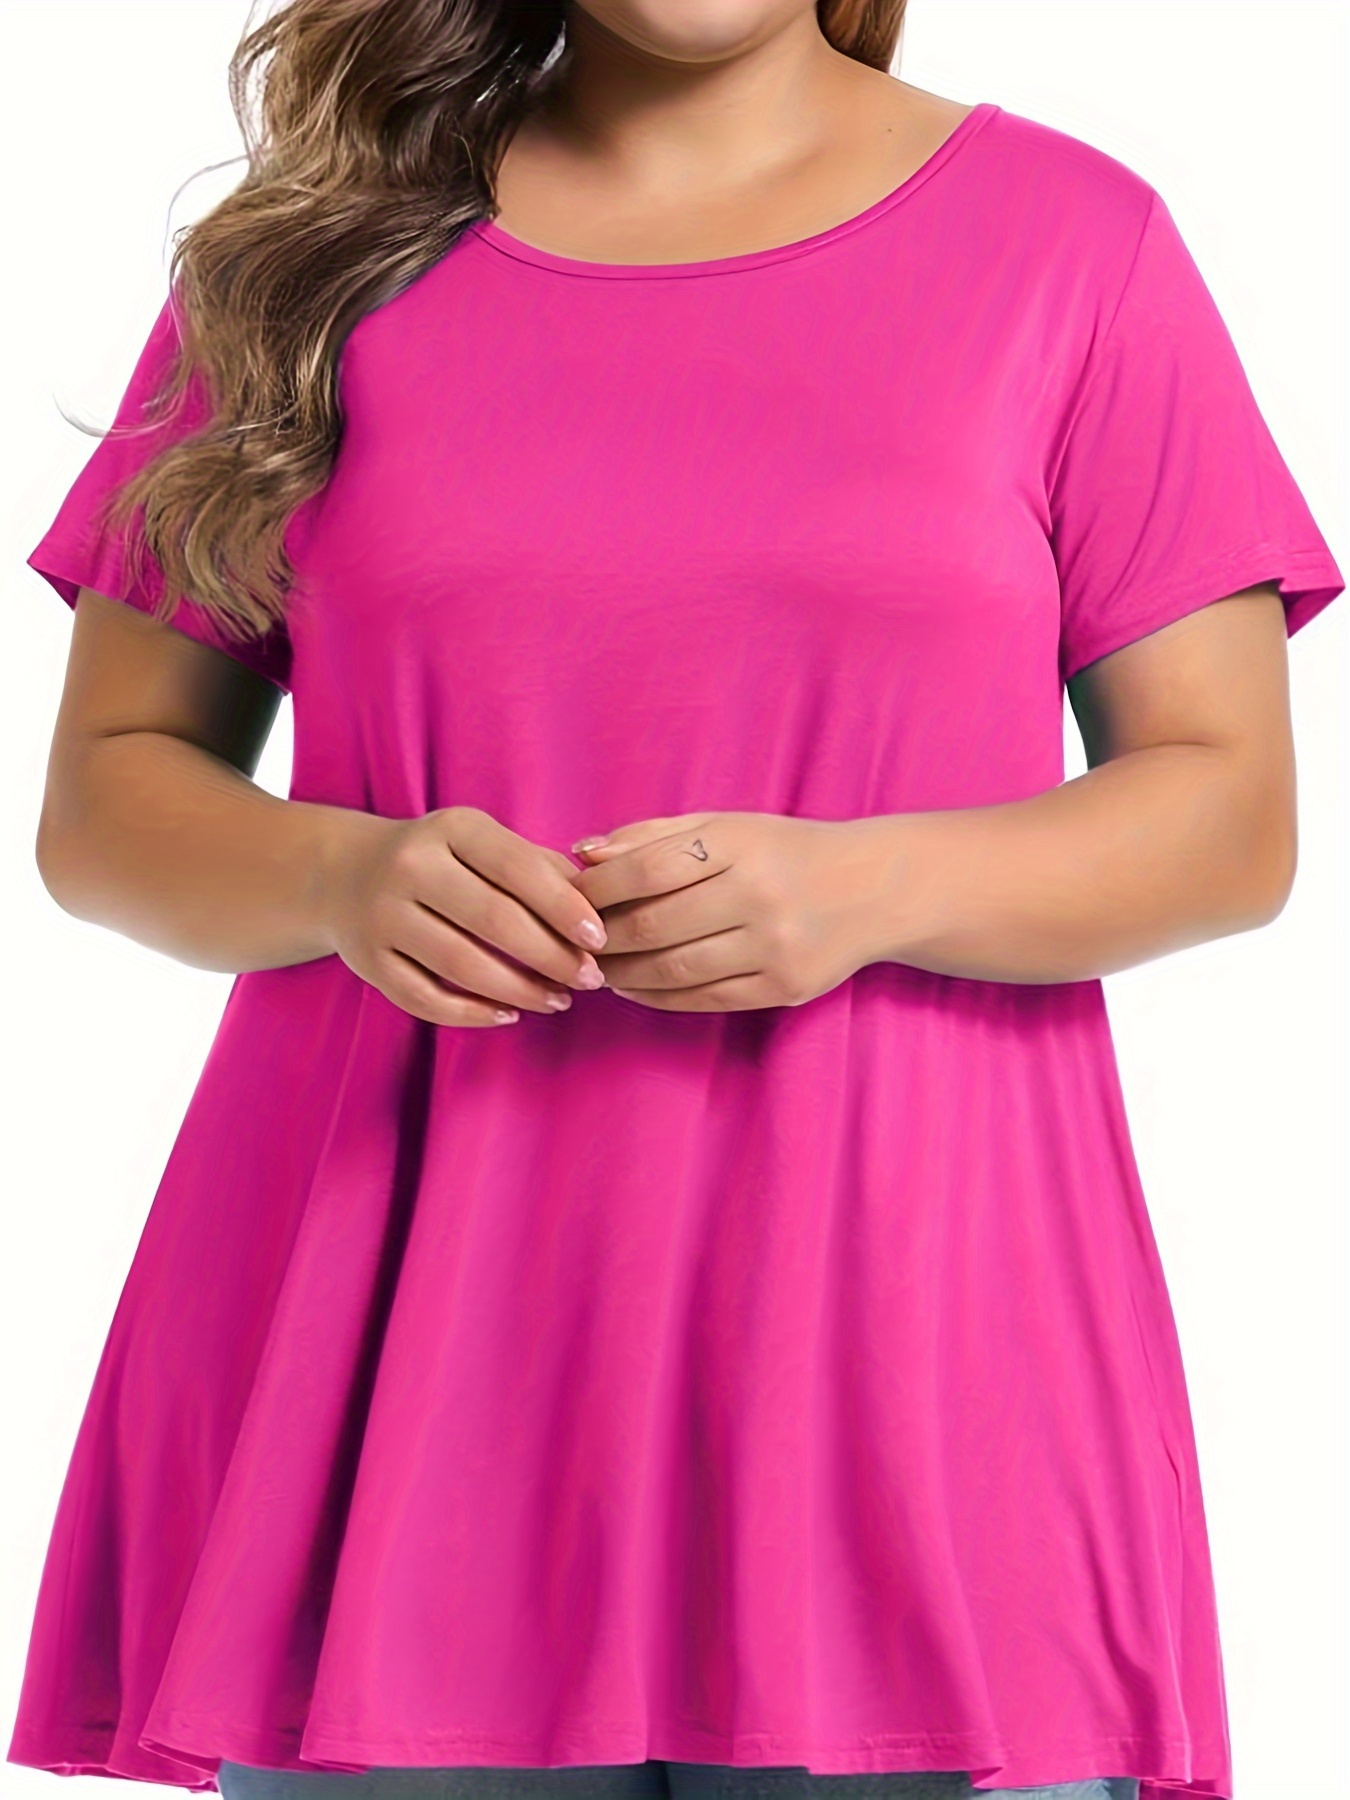 Zelos Curvy Tee Shirt Womens Size 2X Pink Tie Dye Short Sleeves